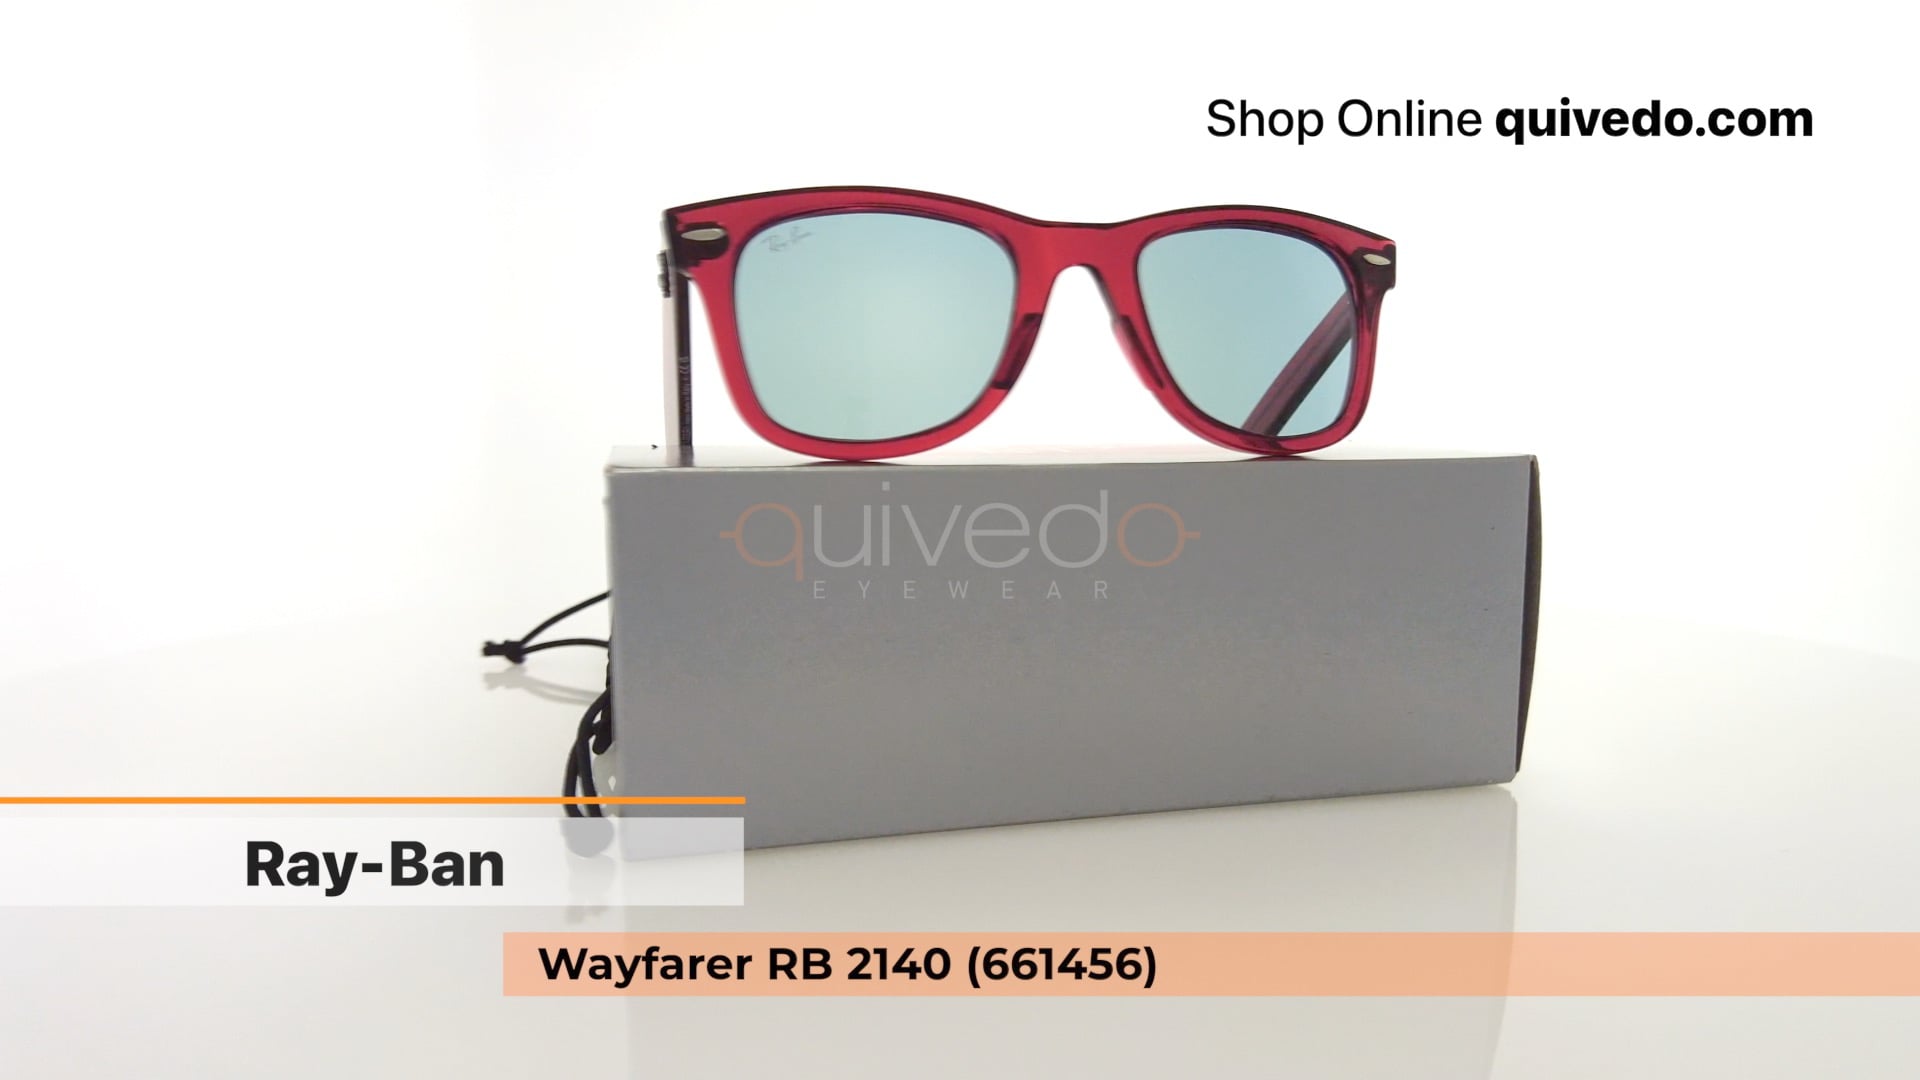 Ray-Ban Wayfarer RB 2140 (661456)